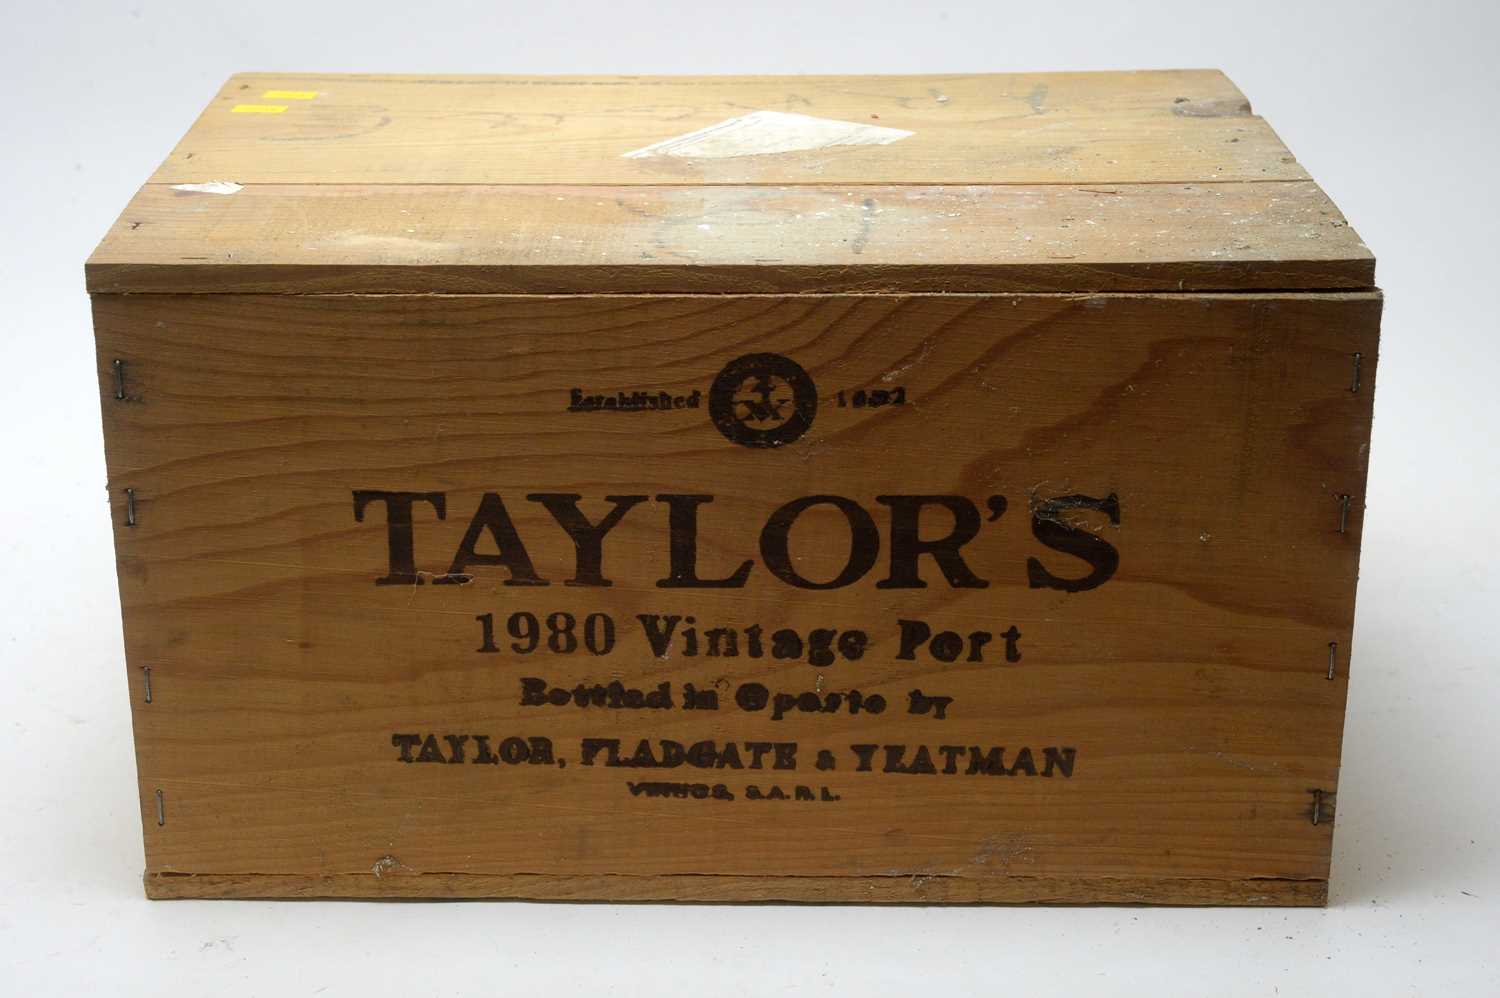 Lot 27 - Taylors Vintage Port 1980